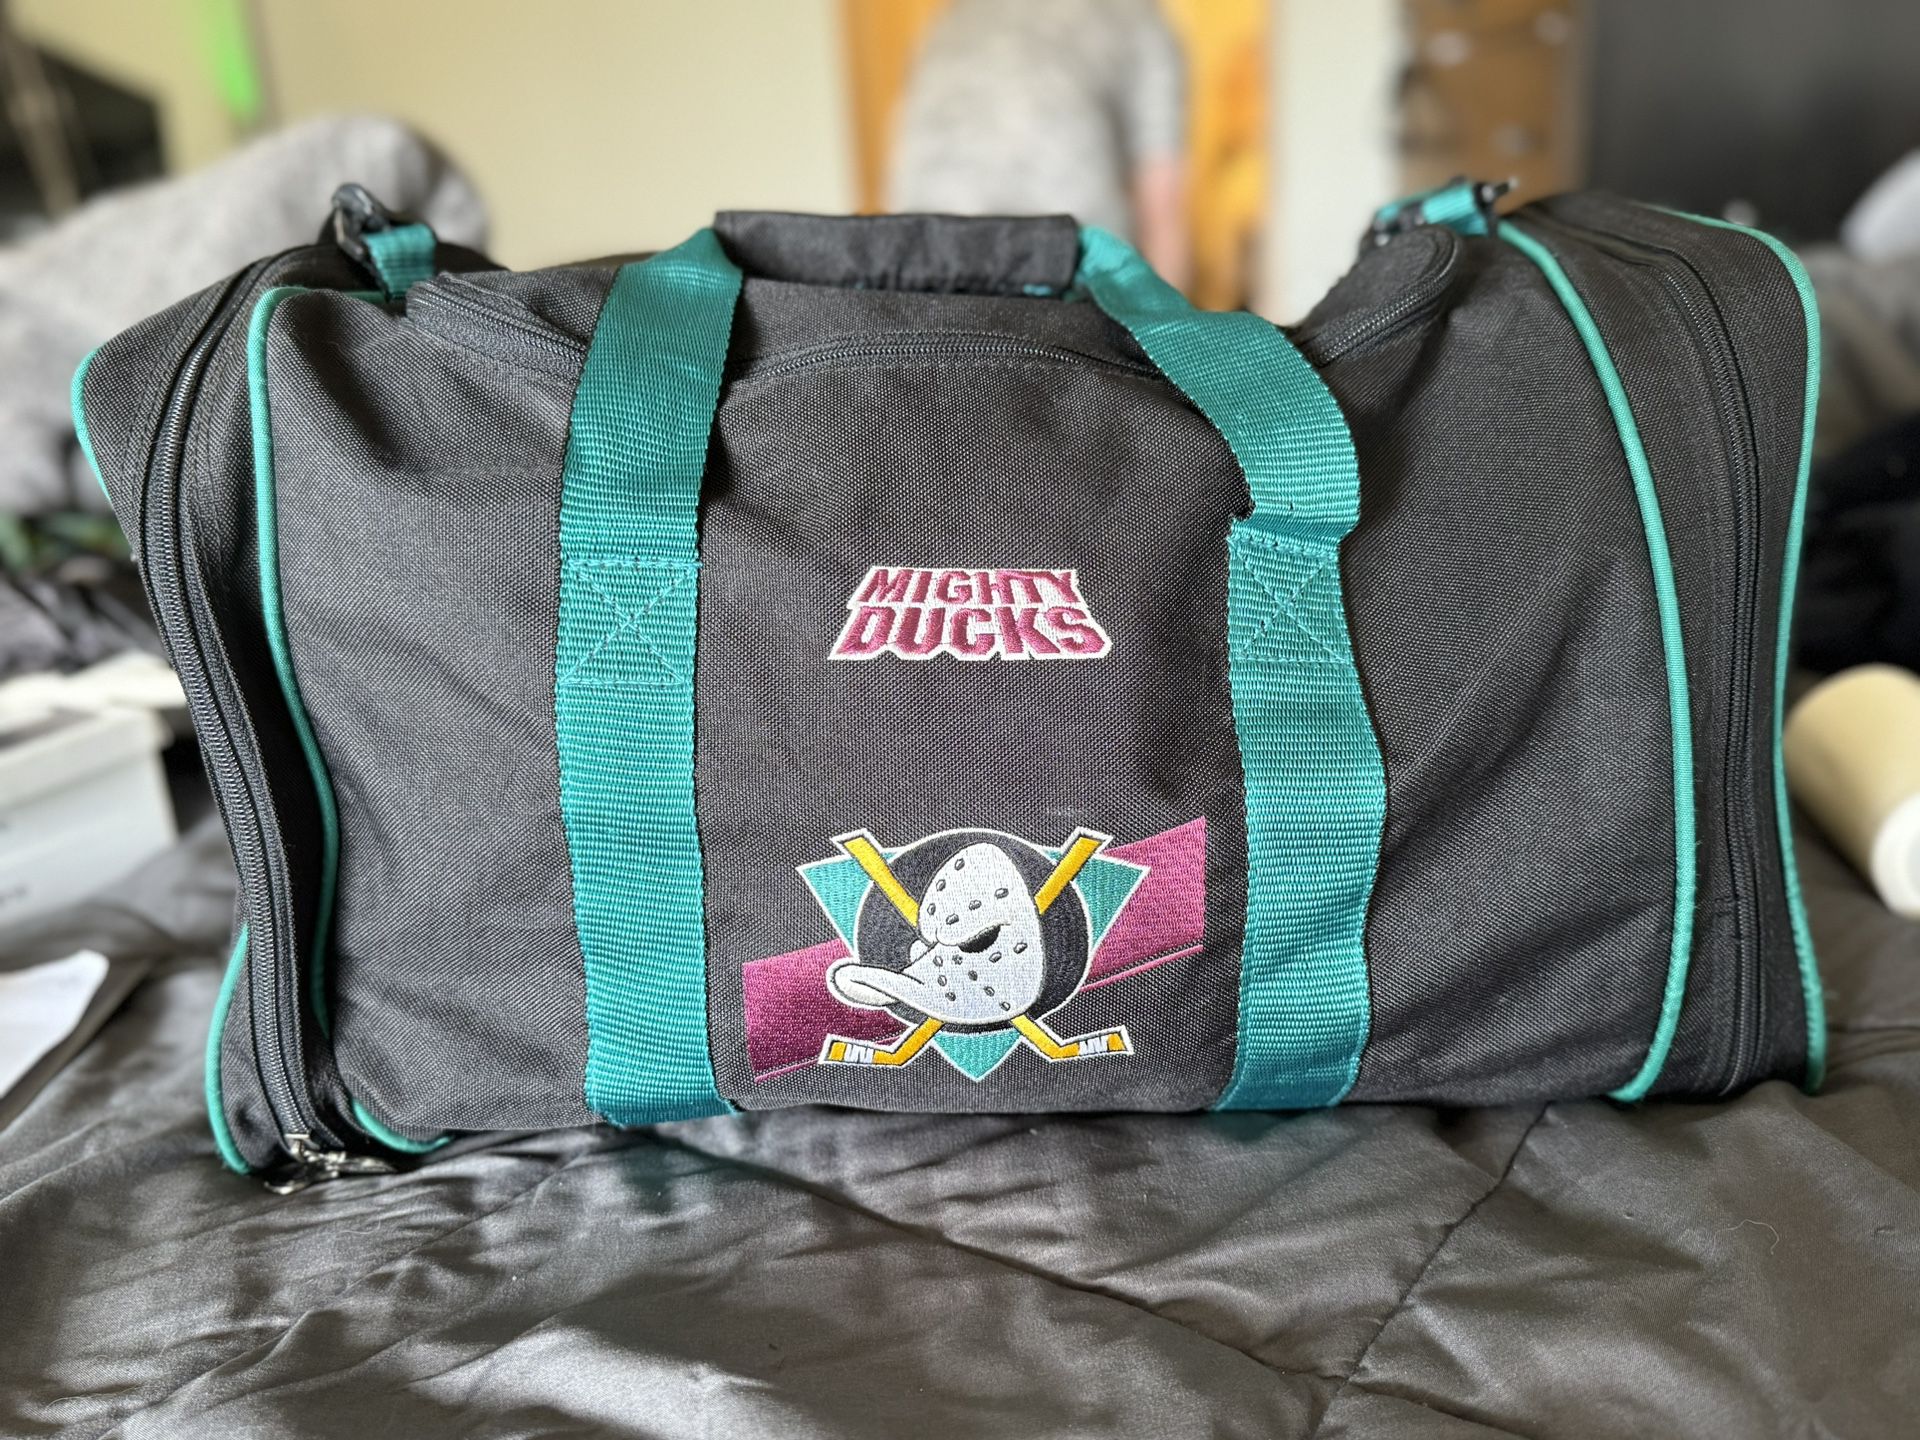 Mighty Ducks Of Anaheim Duffle Bag